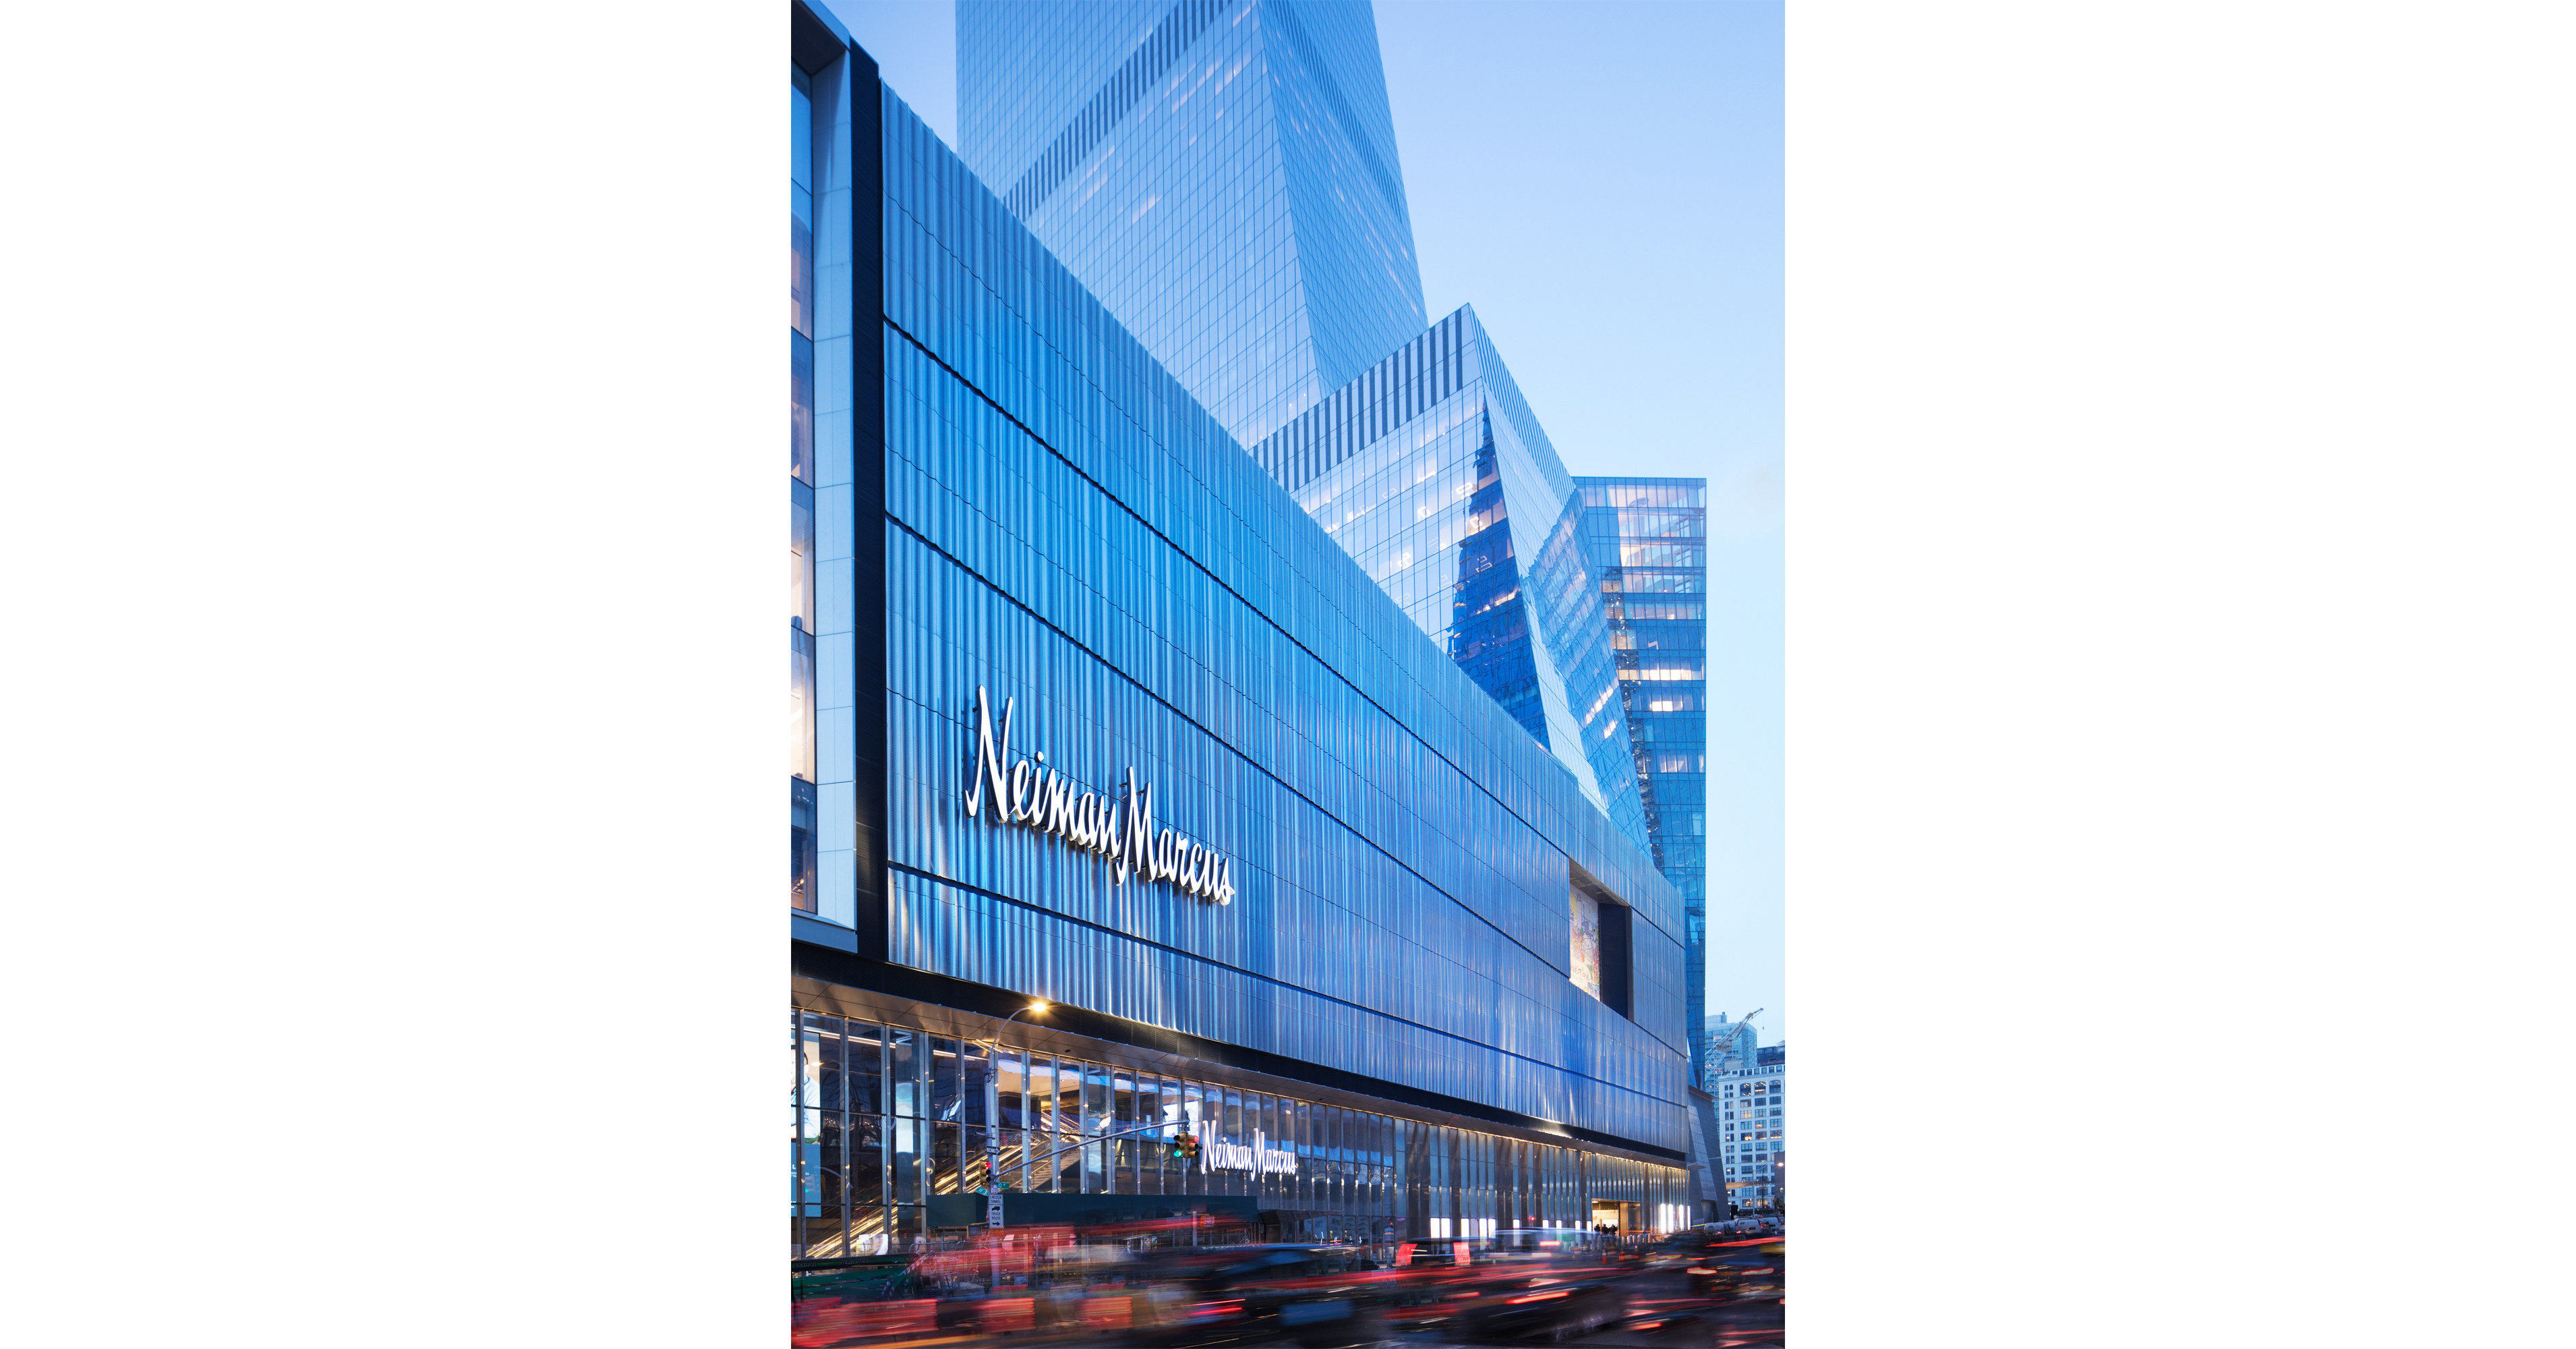 Neiman Marcus flagship store by Janson Goldstein, Related, AvroKO